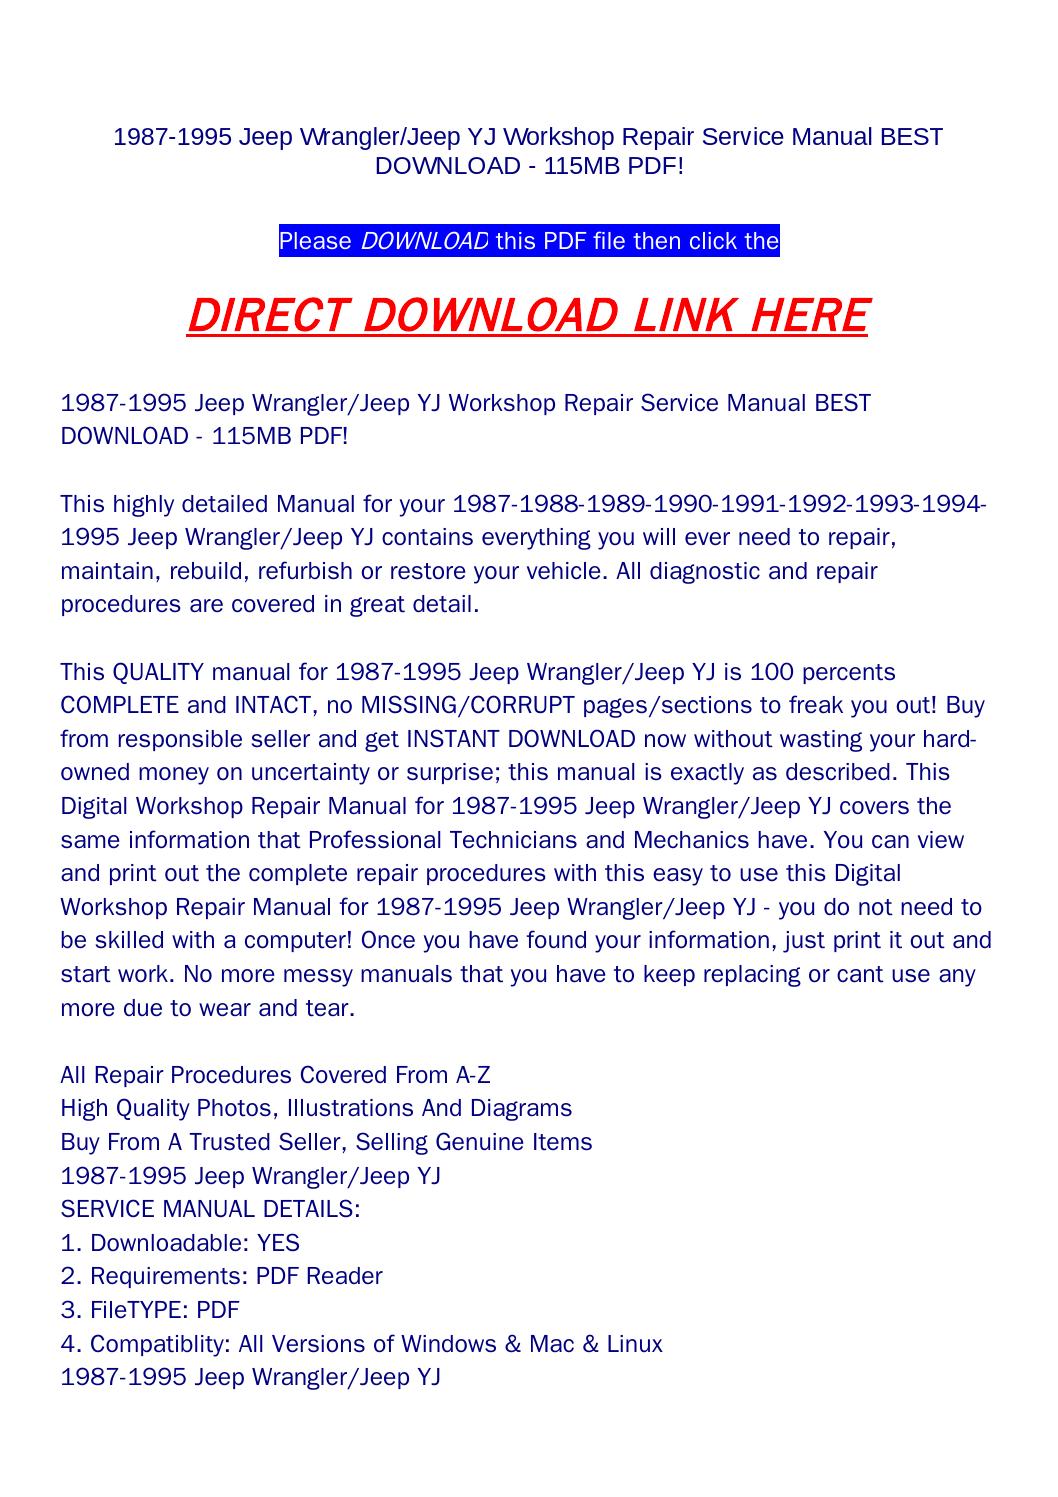 Jeep Yj Service Manual Pdf Download